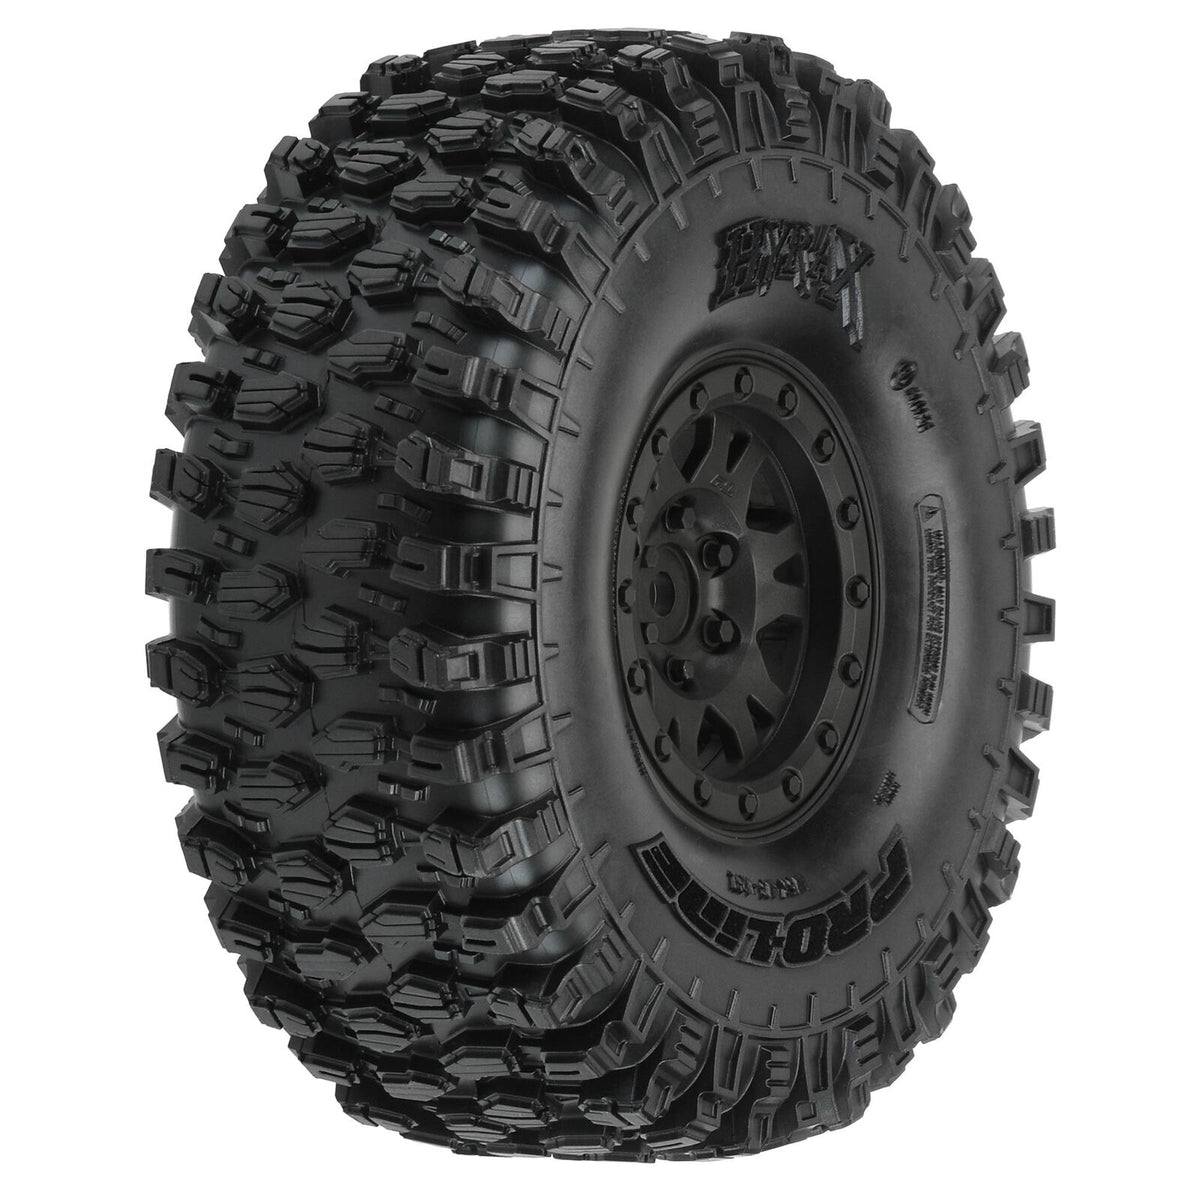 1/10 Hyrax G8 F/R 1.9" Crawler Tires Mounted 12mm Black Impulse (2) - PRO1012810